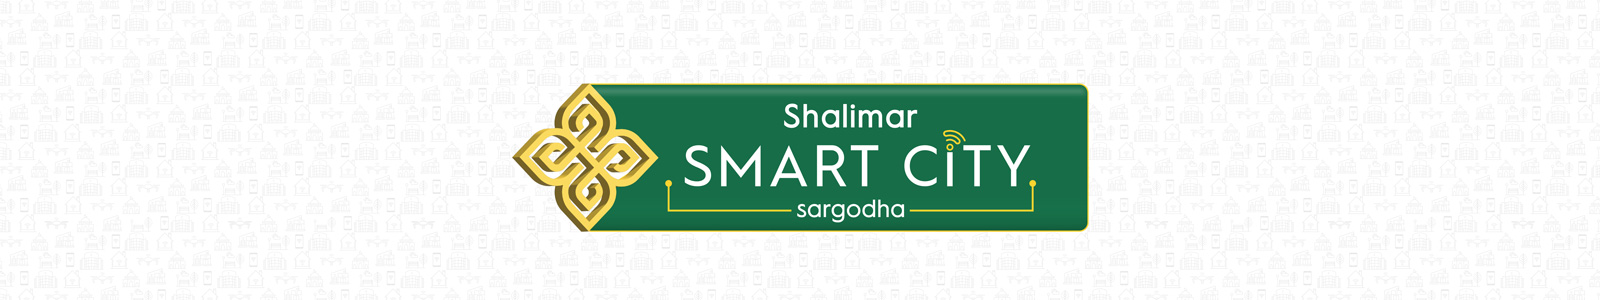 About Shalimar Smart City lg